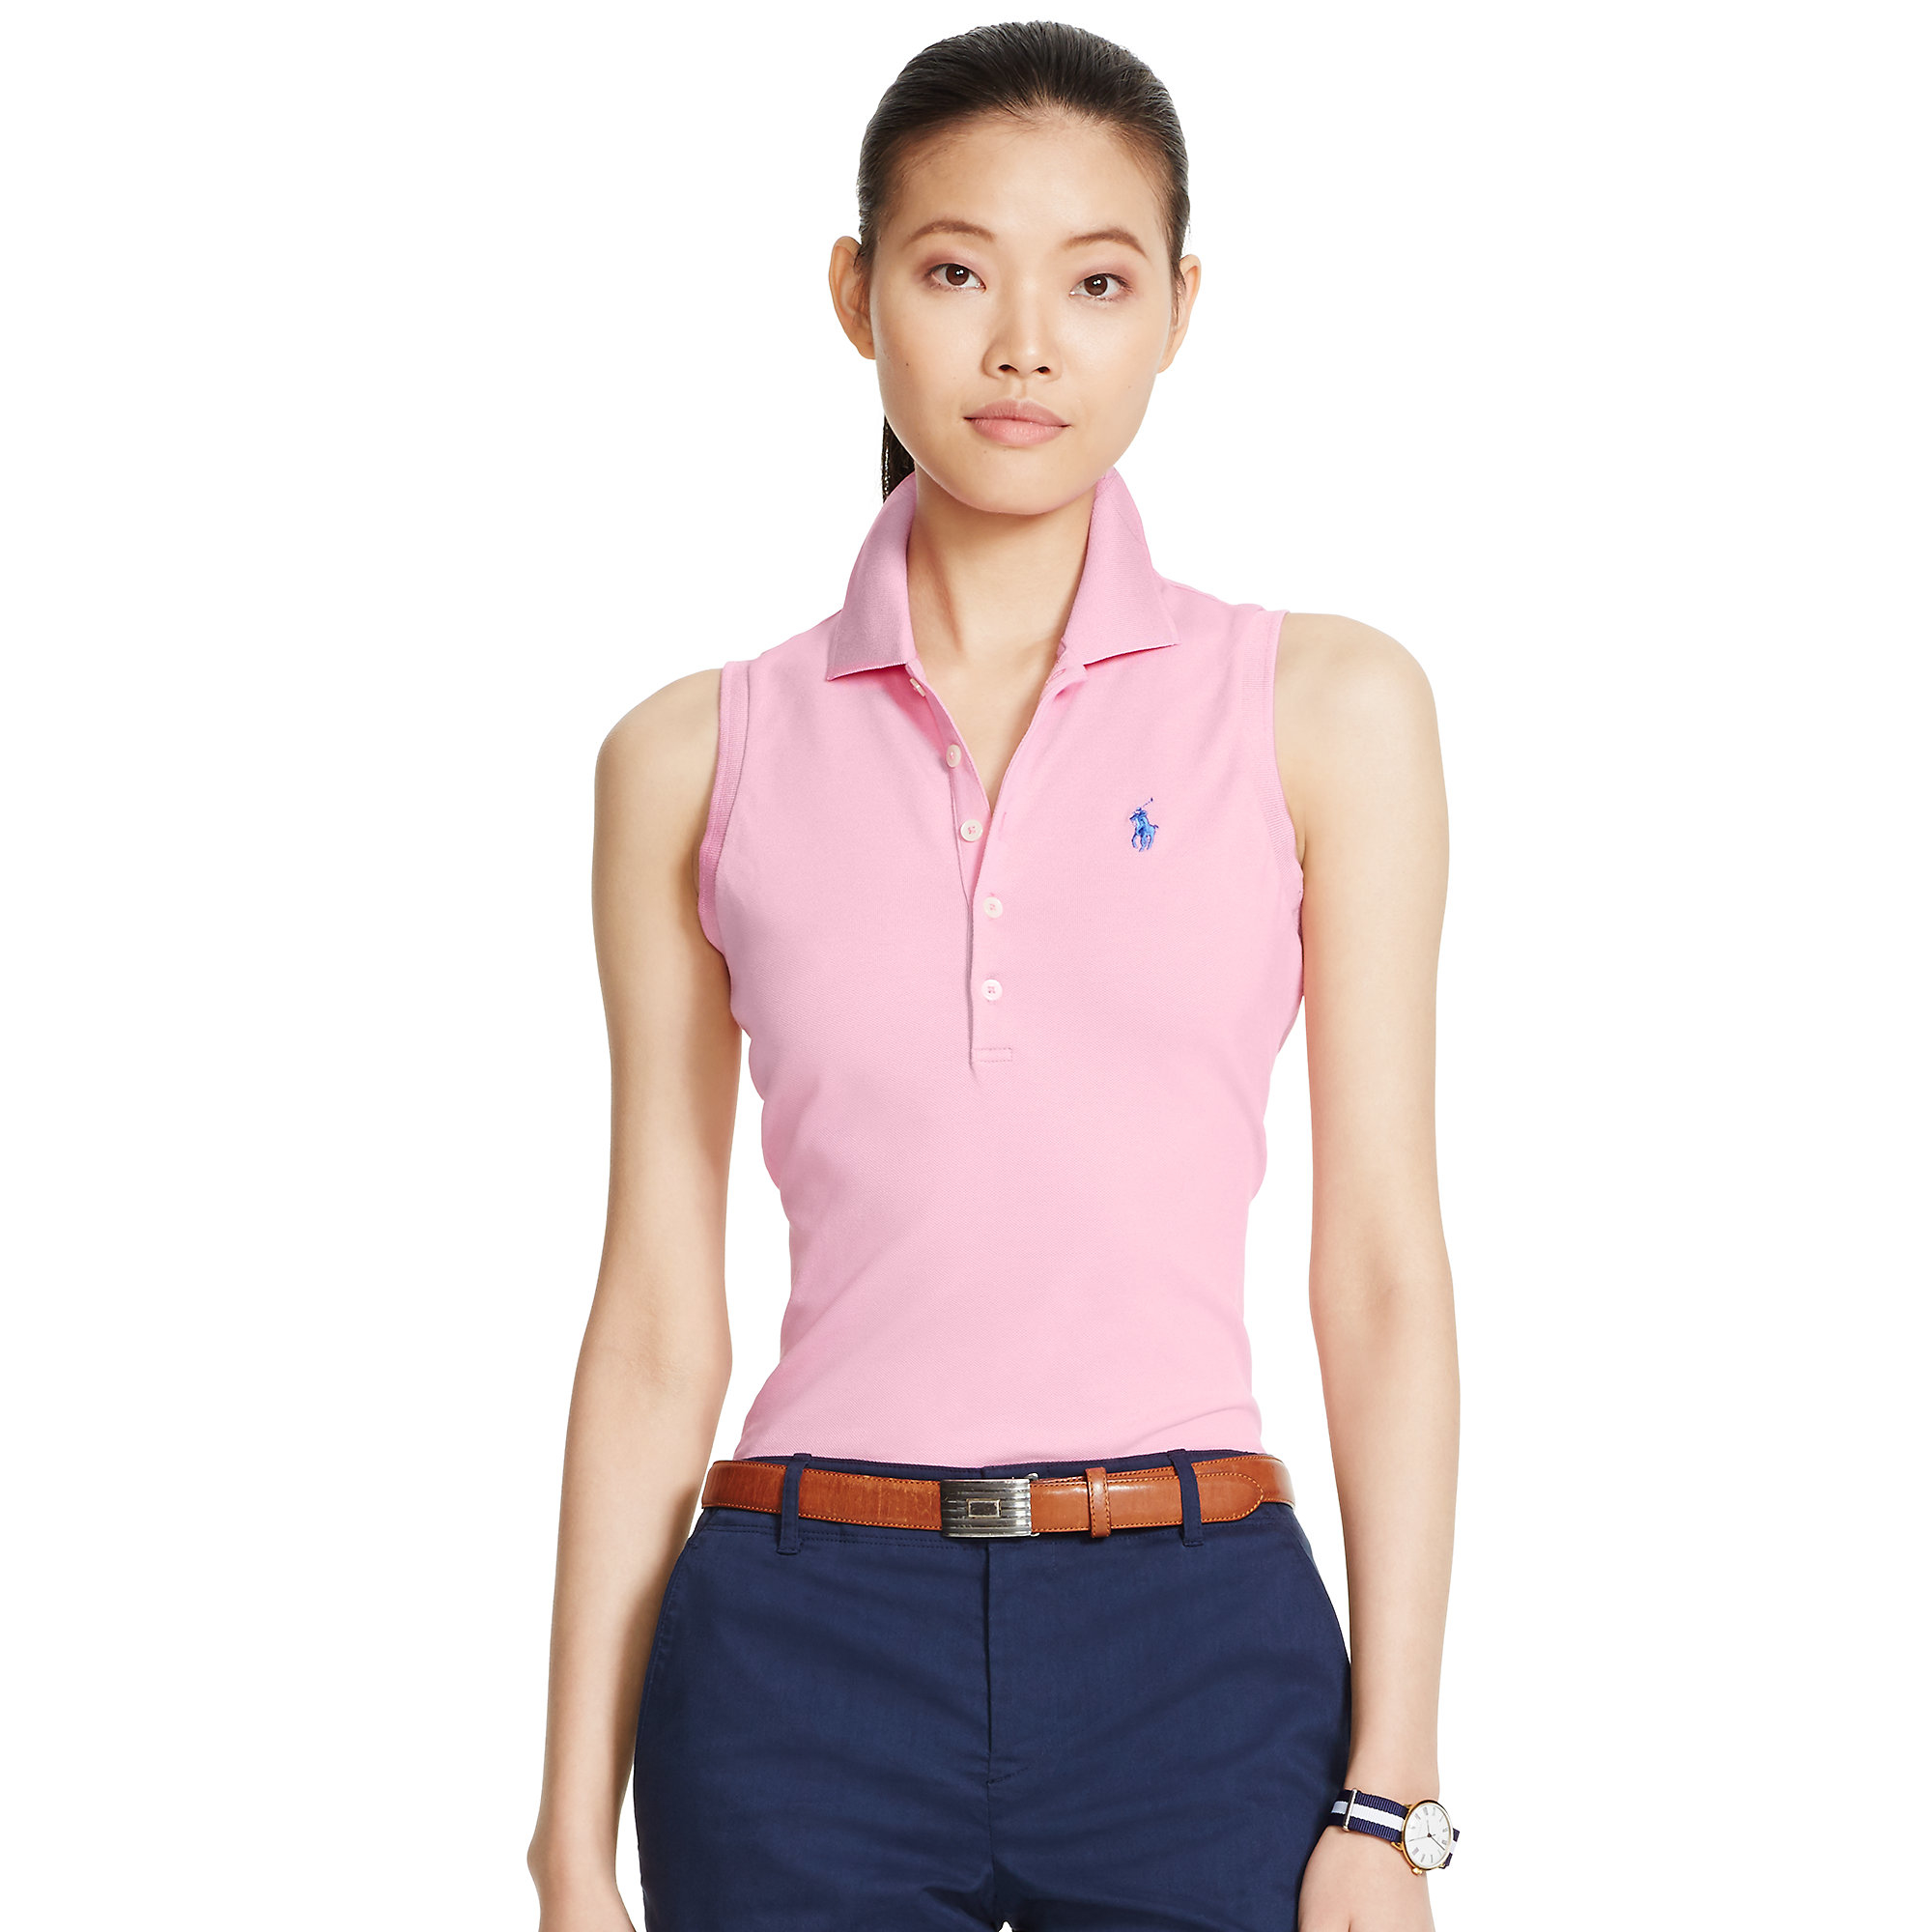 Ralph Lauren Golf Sleeveless Cotton Mesh Polo in Pink - Lyst